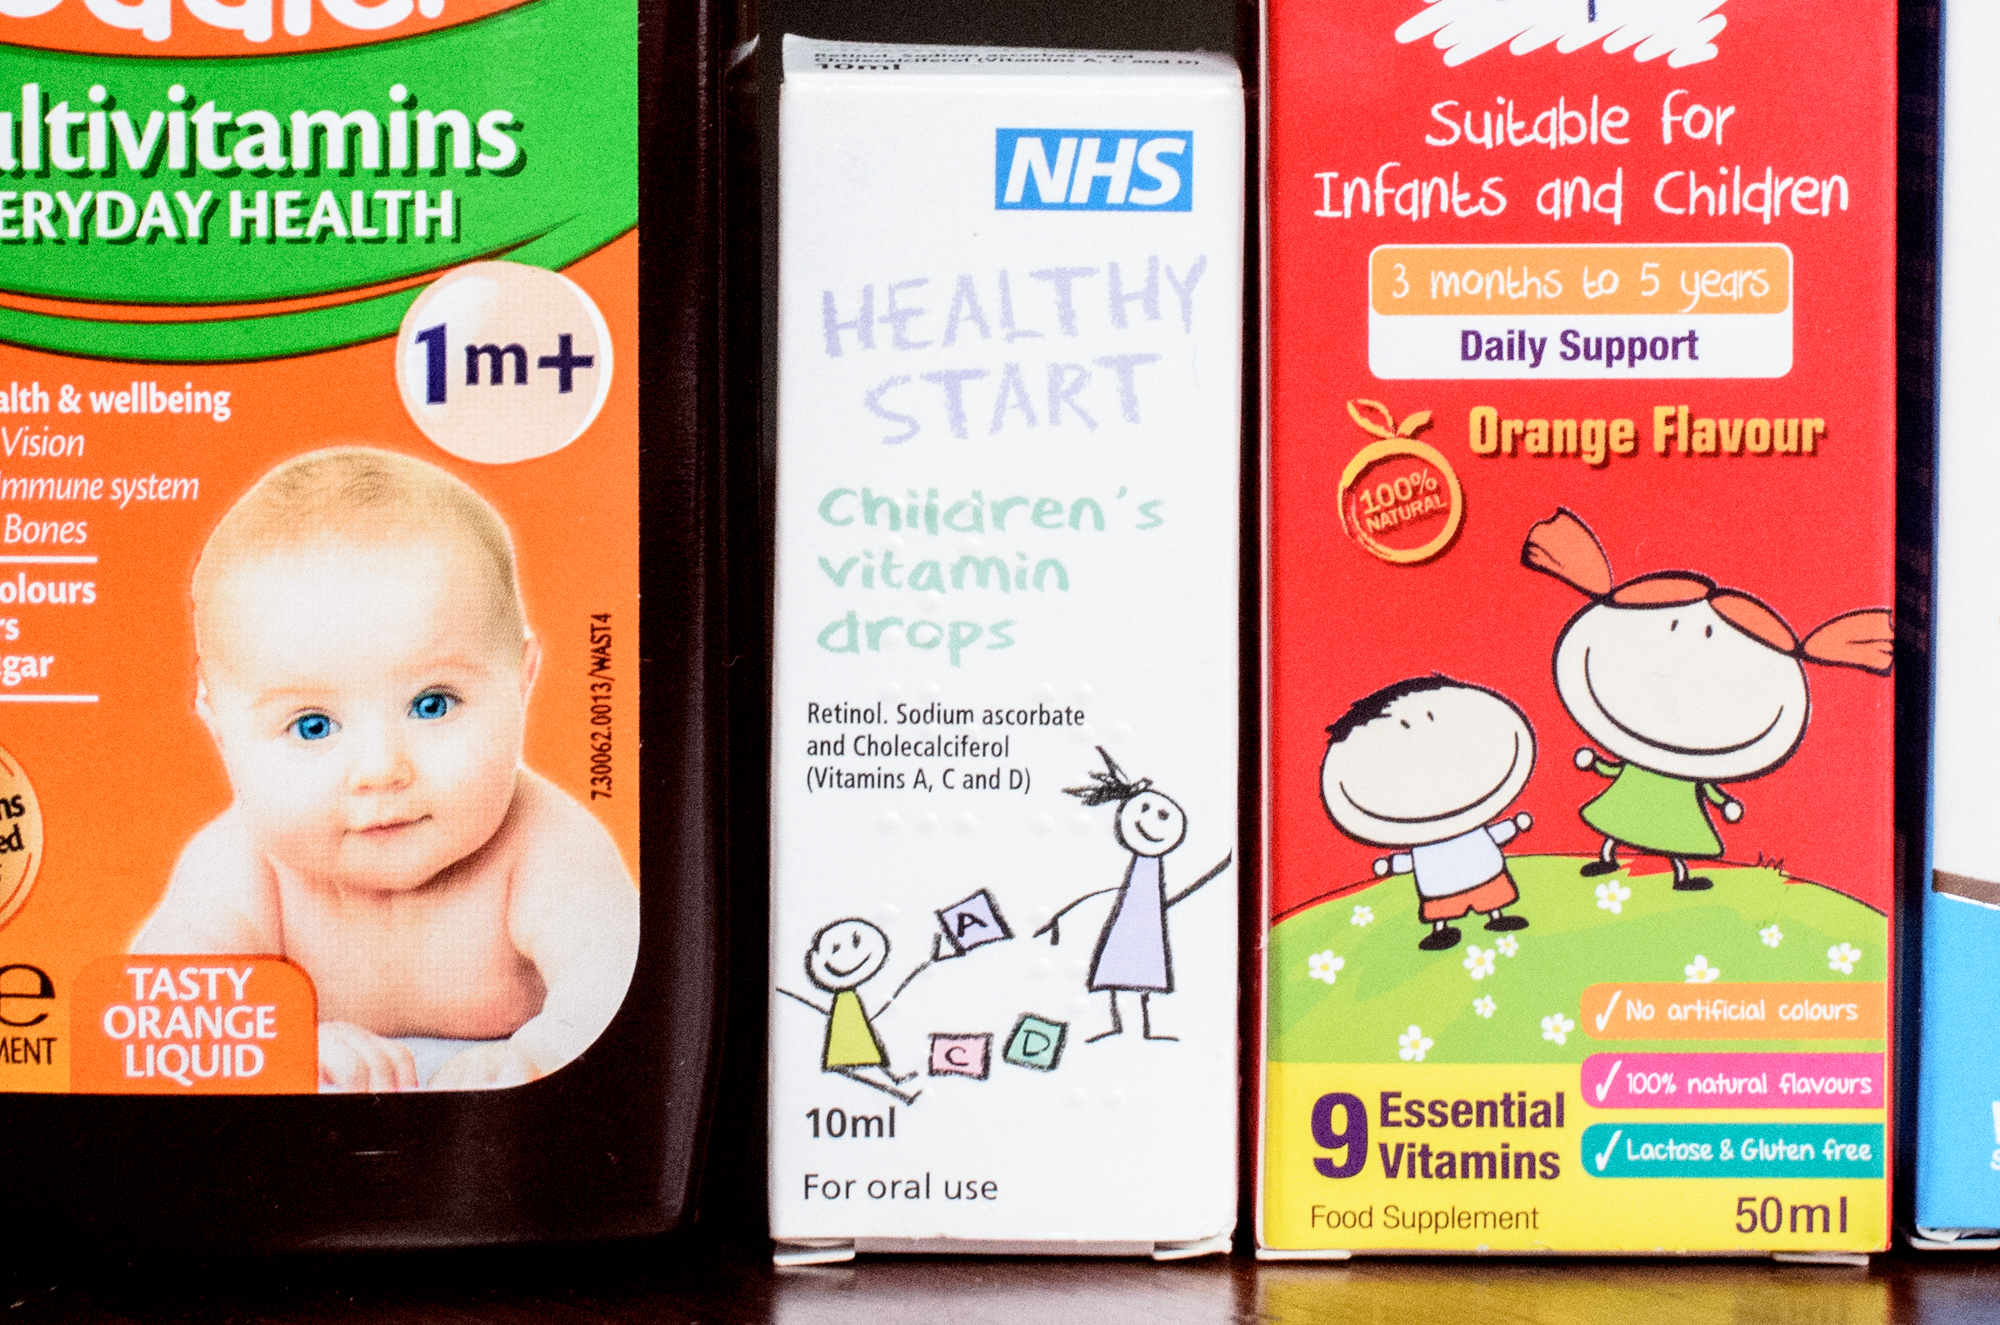 Healthy Start children’s vitamin drops